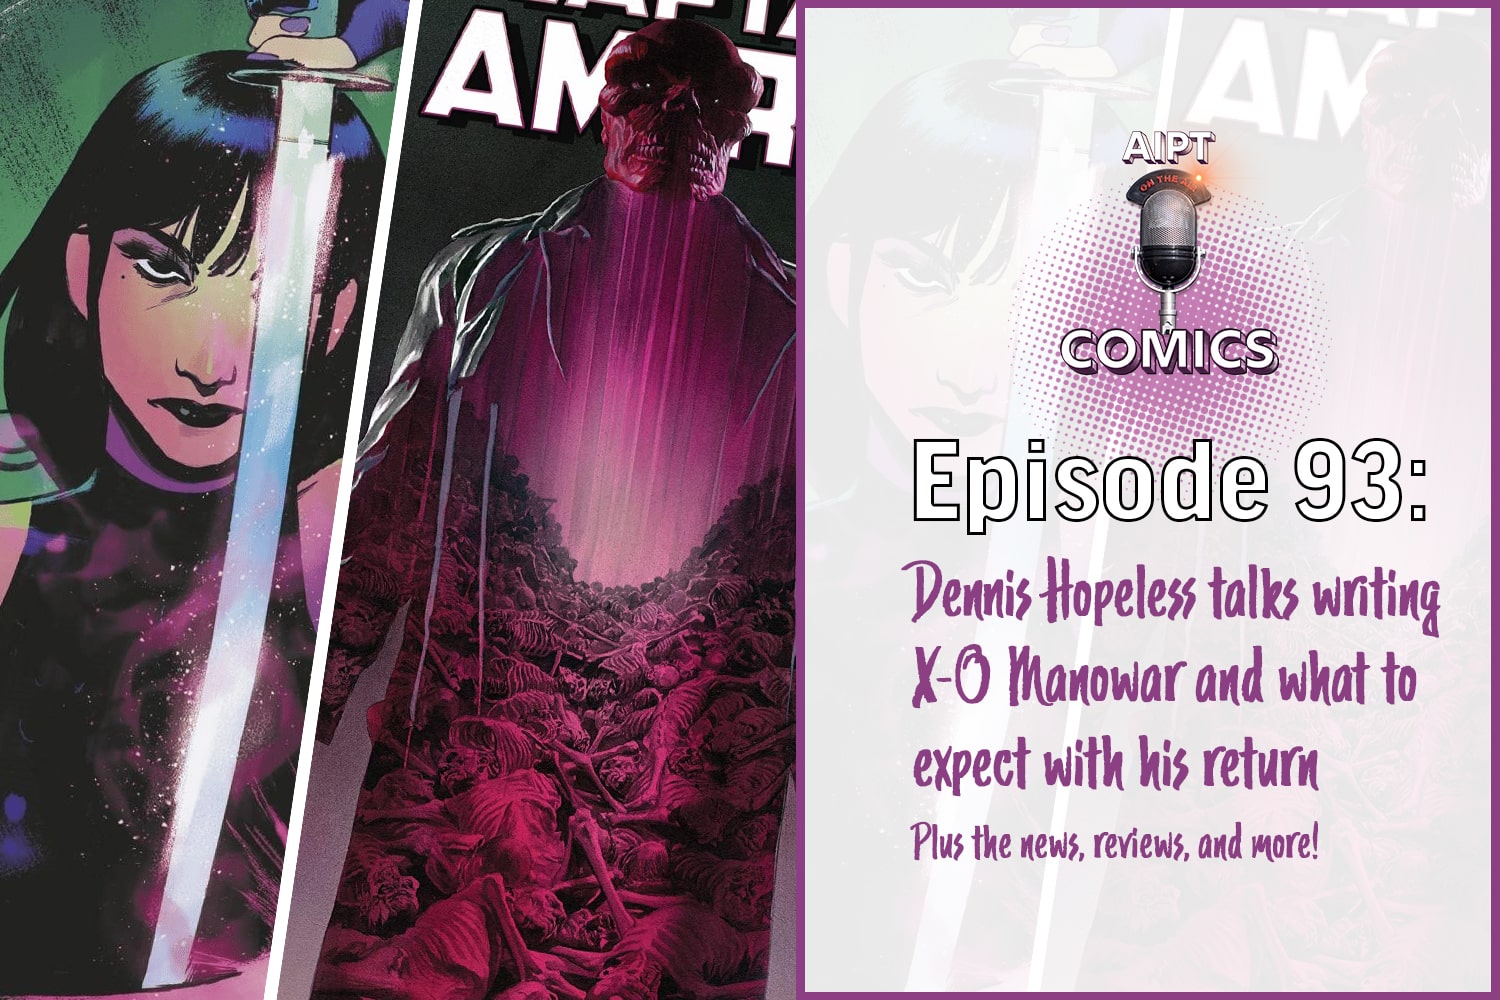 AIPT Comics Podcast Episode 93: Guest Dennis Hopeless digs into X-O Manowar's return